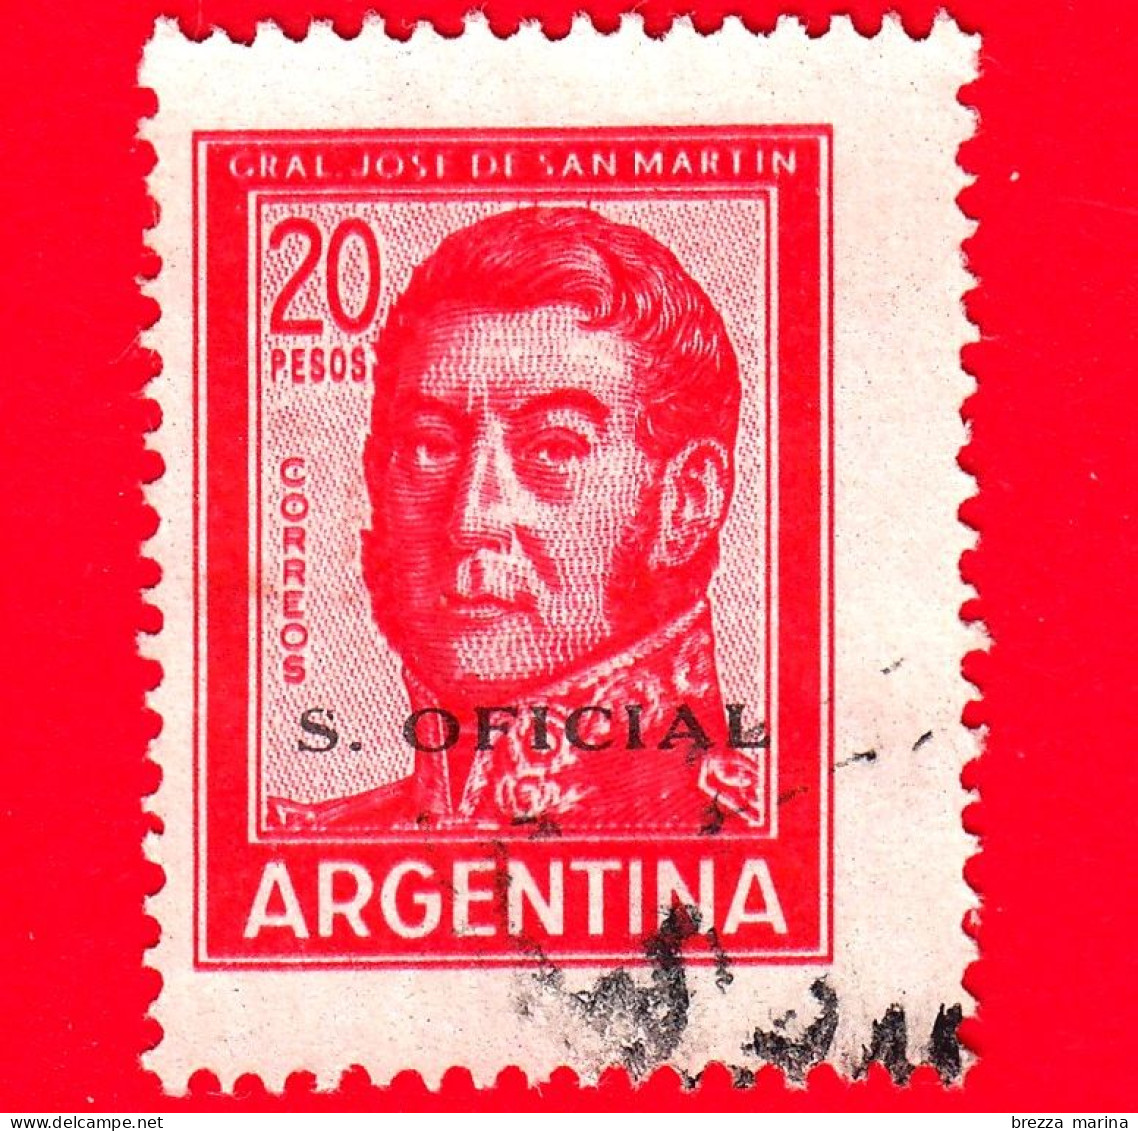 ARGENTINA - Usato -  1969 - General José Francisco De San Martin (1778-1850) - 20 - Sovrastampato S. OFICIAL - Used Stamps